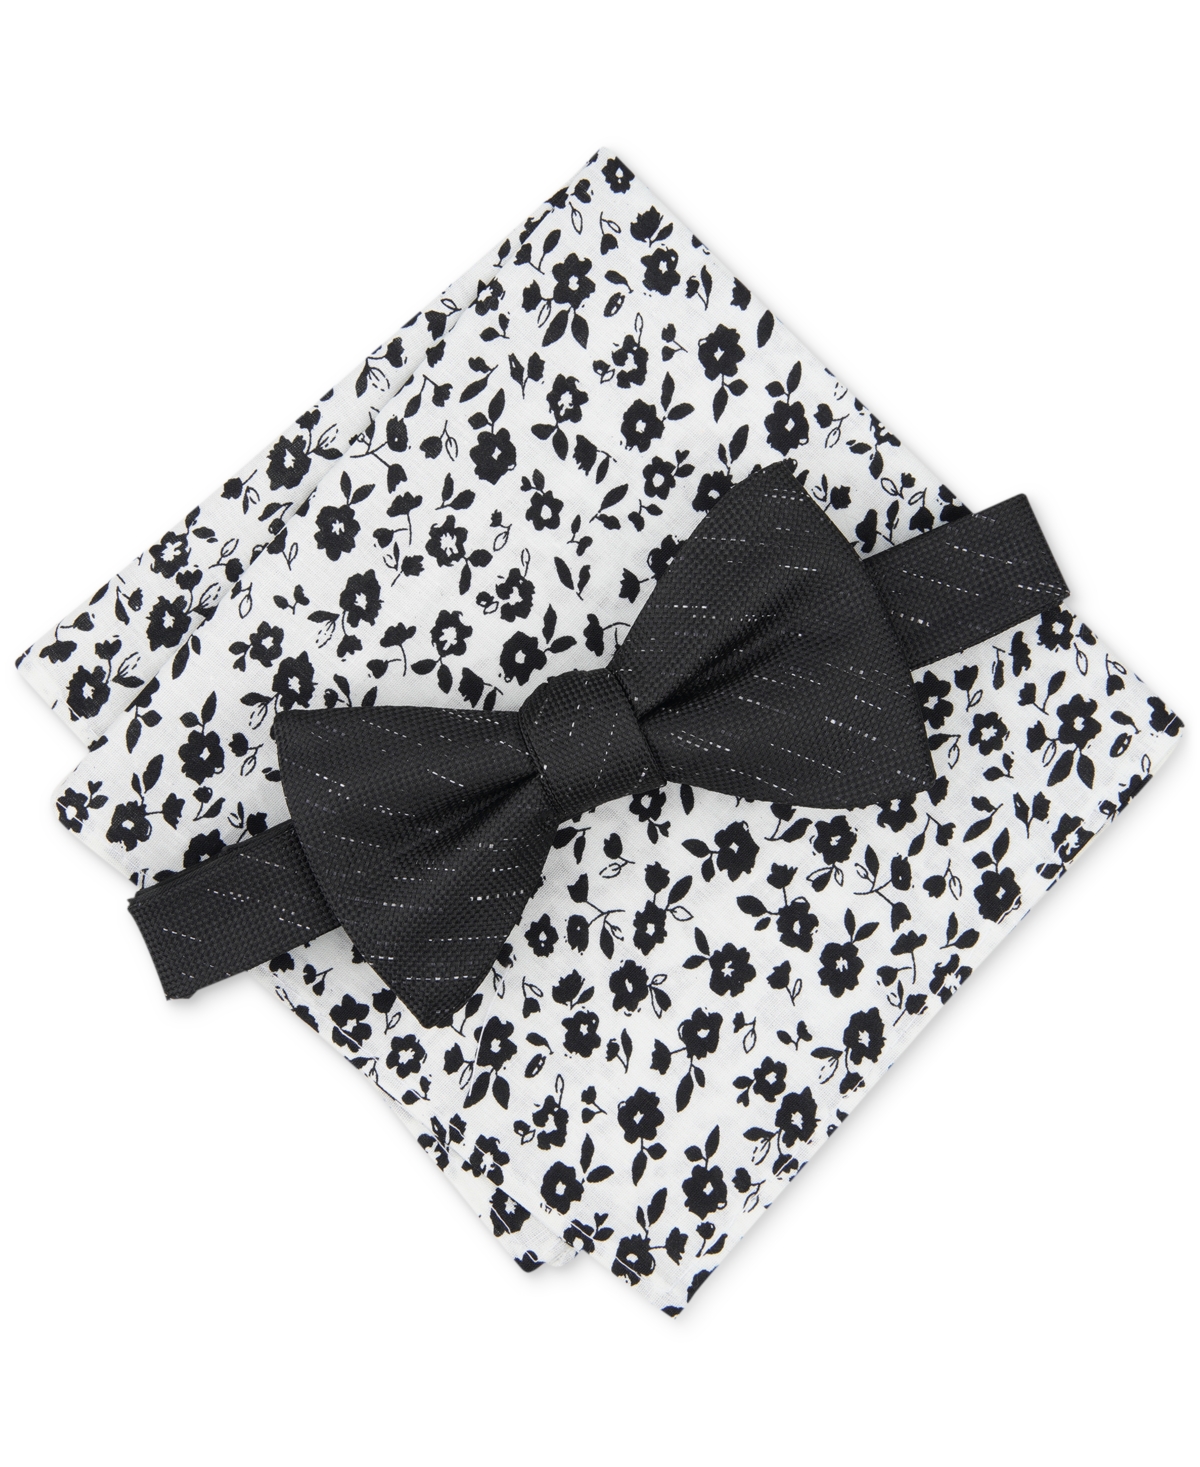 Men's Lansing Solid Bow Tie & Floral Pocket Square Set, Created for Macy's - Black